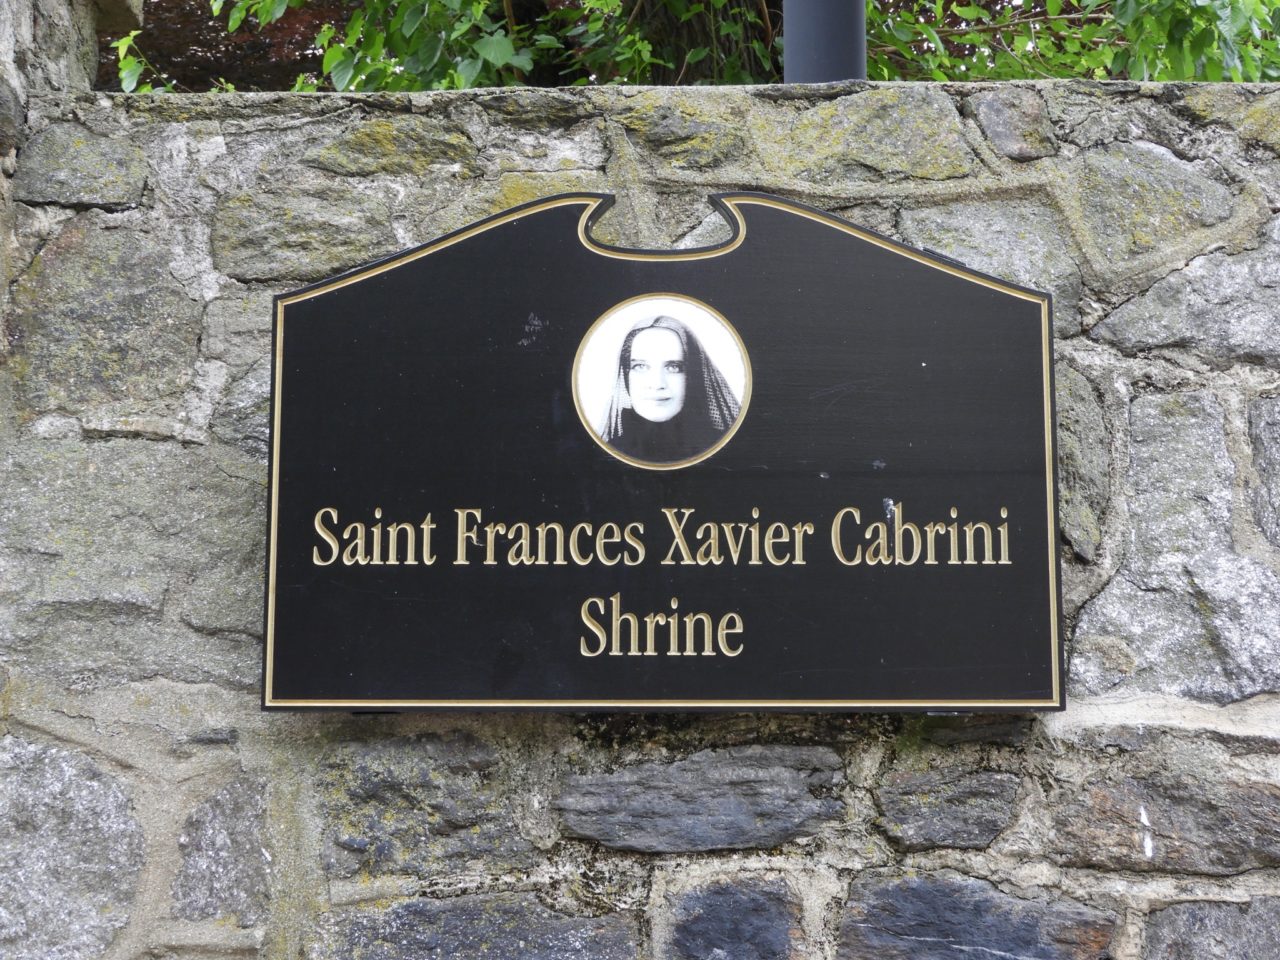 Saint Frances Xavier Cabrini Shrine